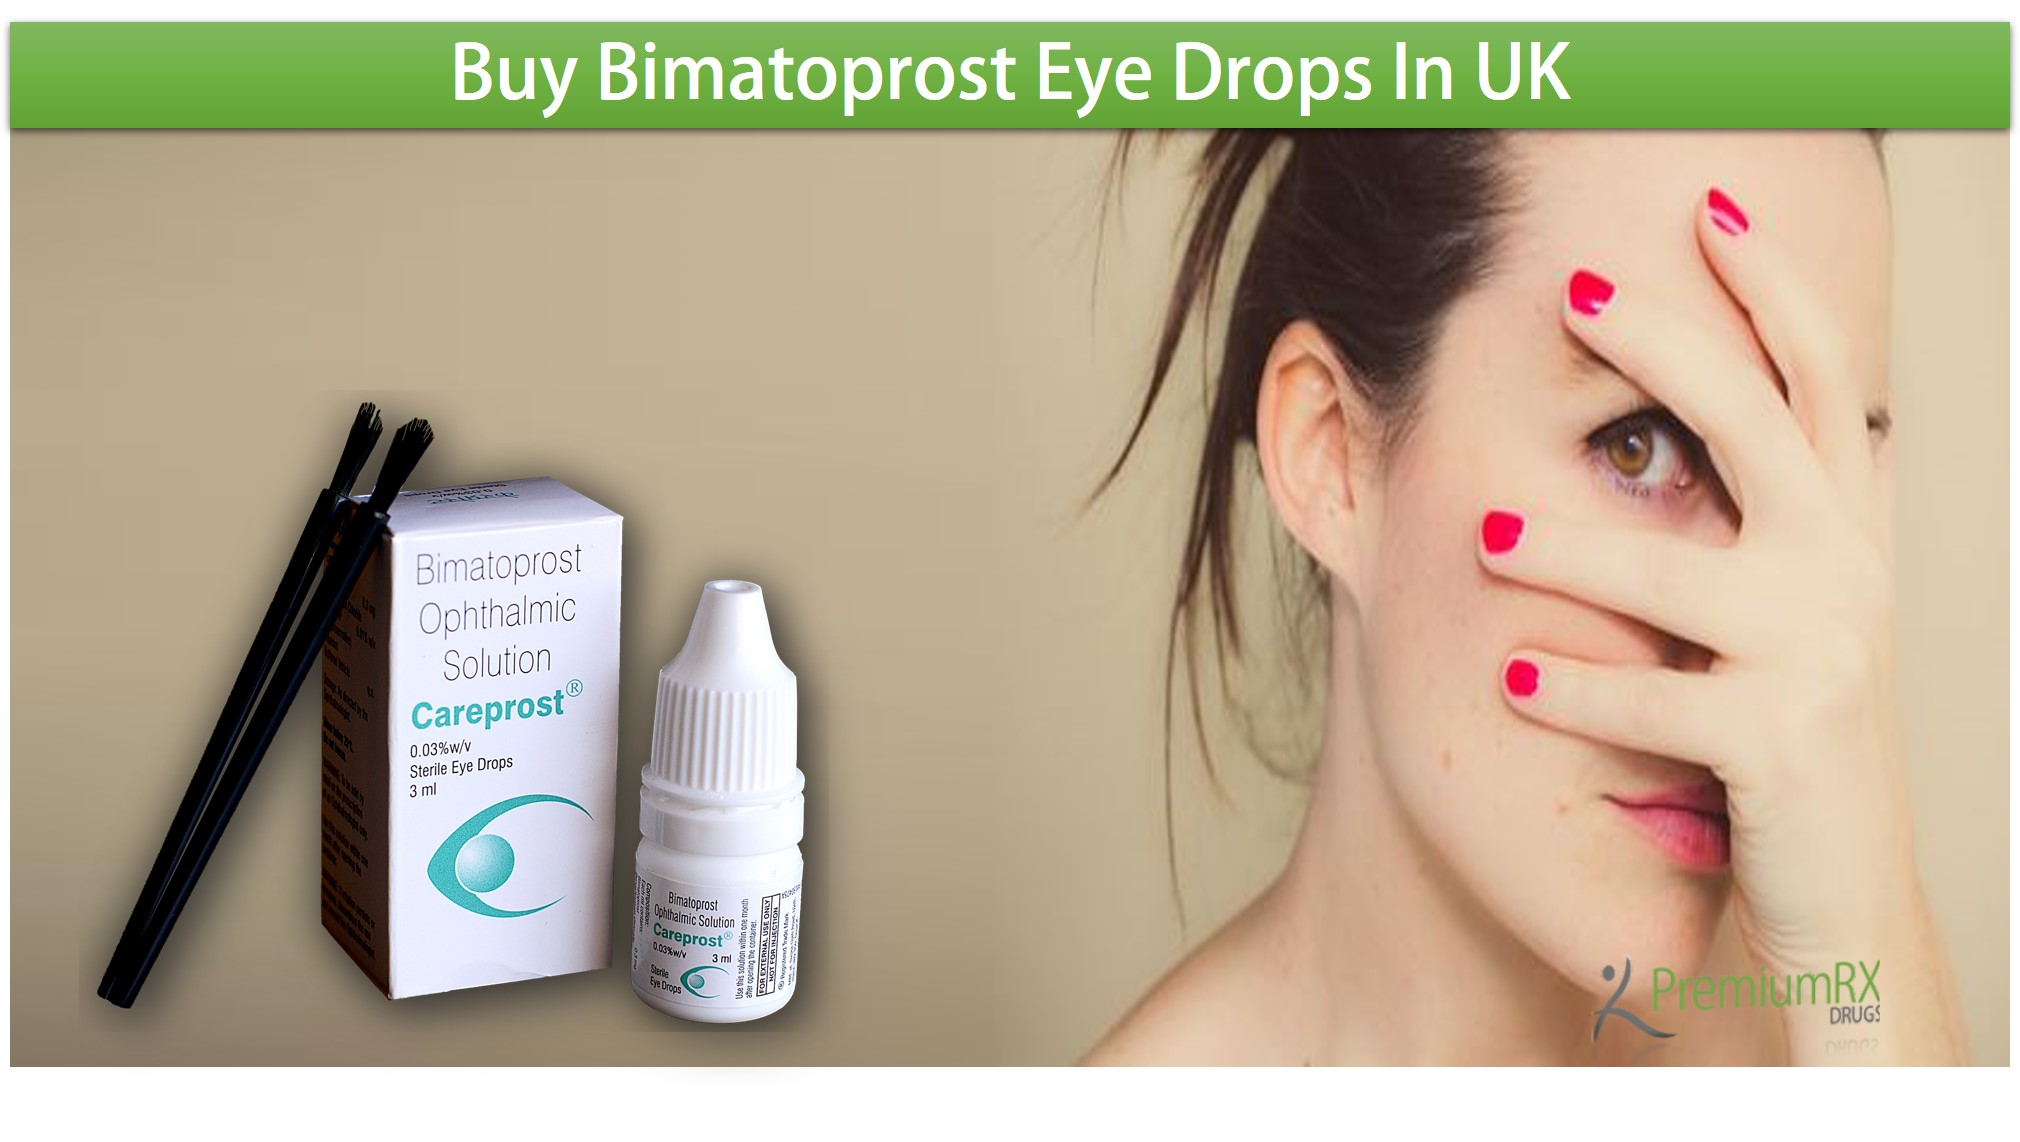 Where Can I Buy Bimatoprost Eye Drops In UK